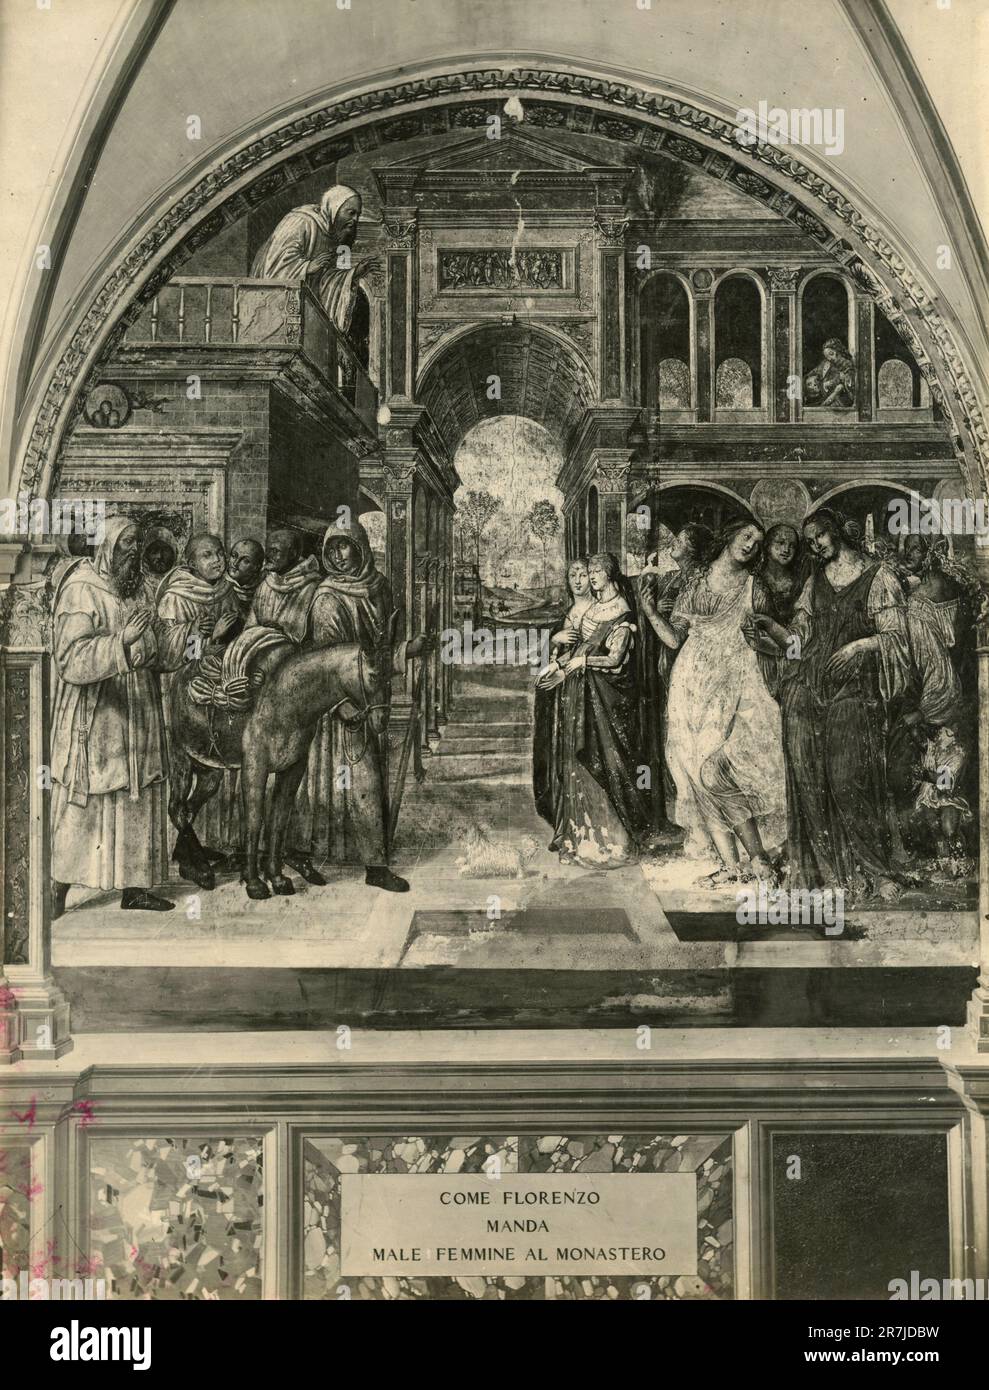 San Florenzo Sends Bad Women to Monastery, Fresco by Italian artist Giovan Antonio Bazzi aka Sodoma, Monte Oliveto Maggiore Abbey, Italy 1900s Stock Photo